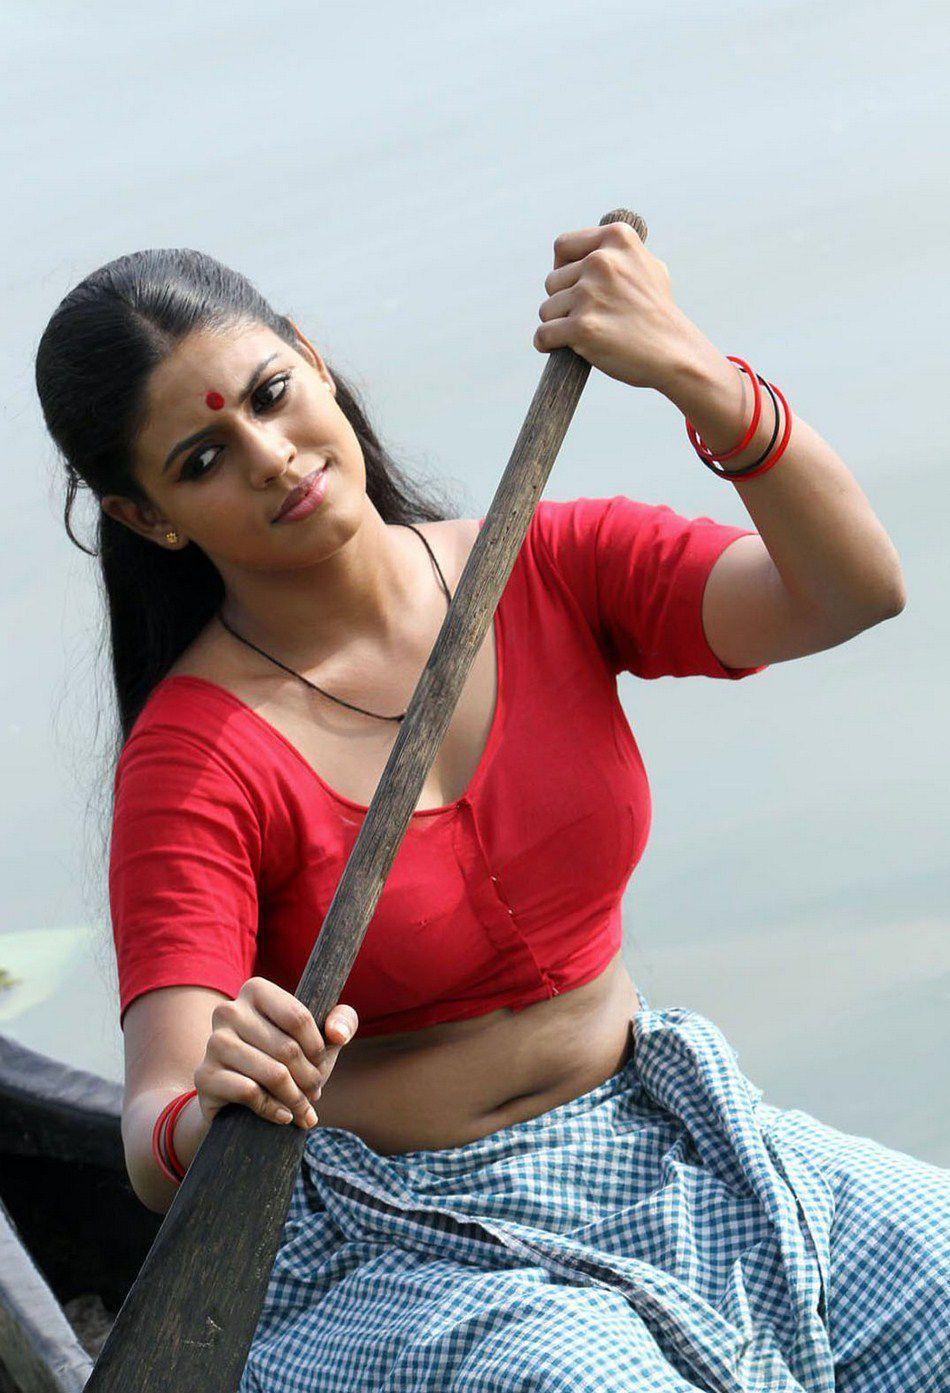 Mallu Actress Sexy Glamour Photos